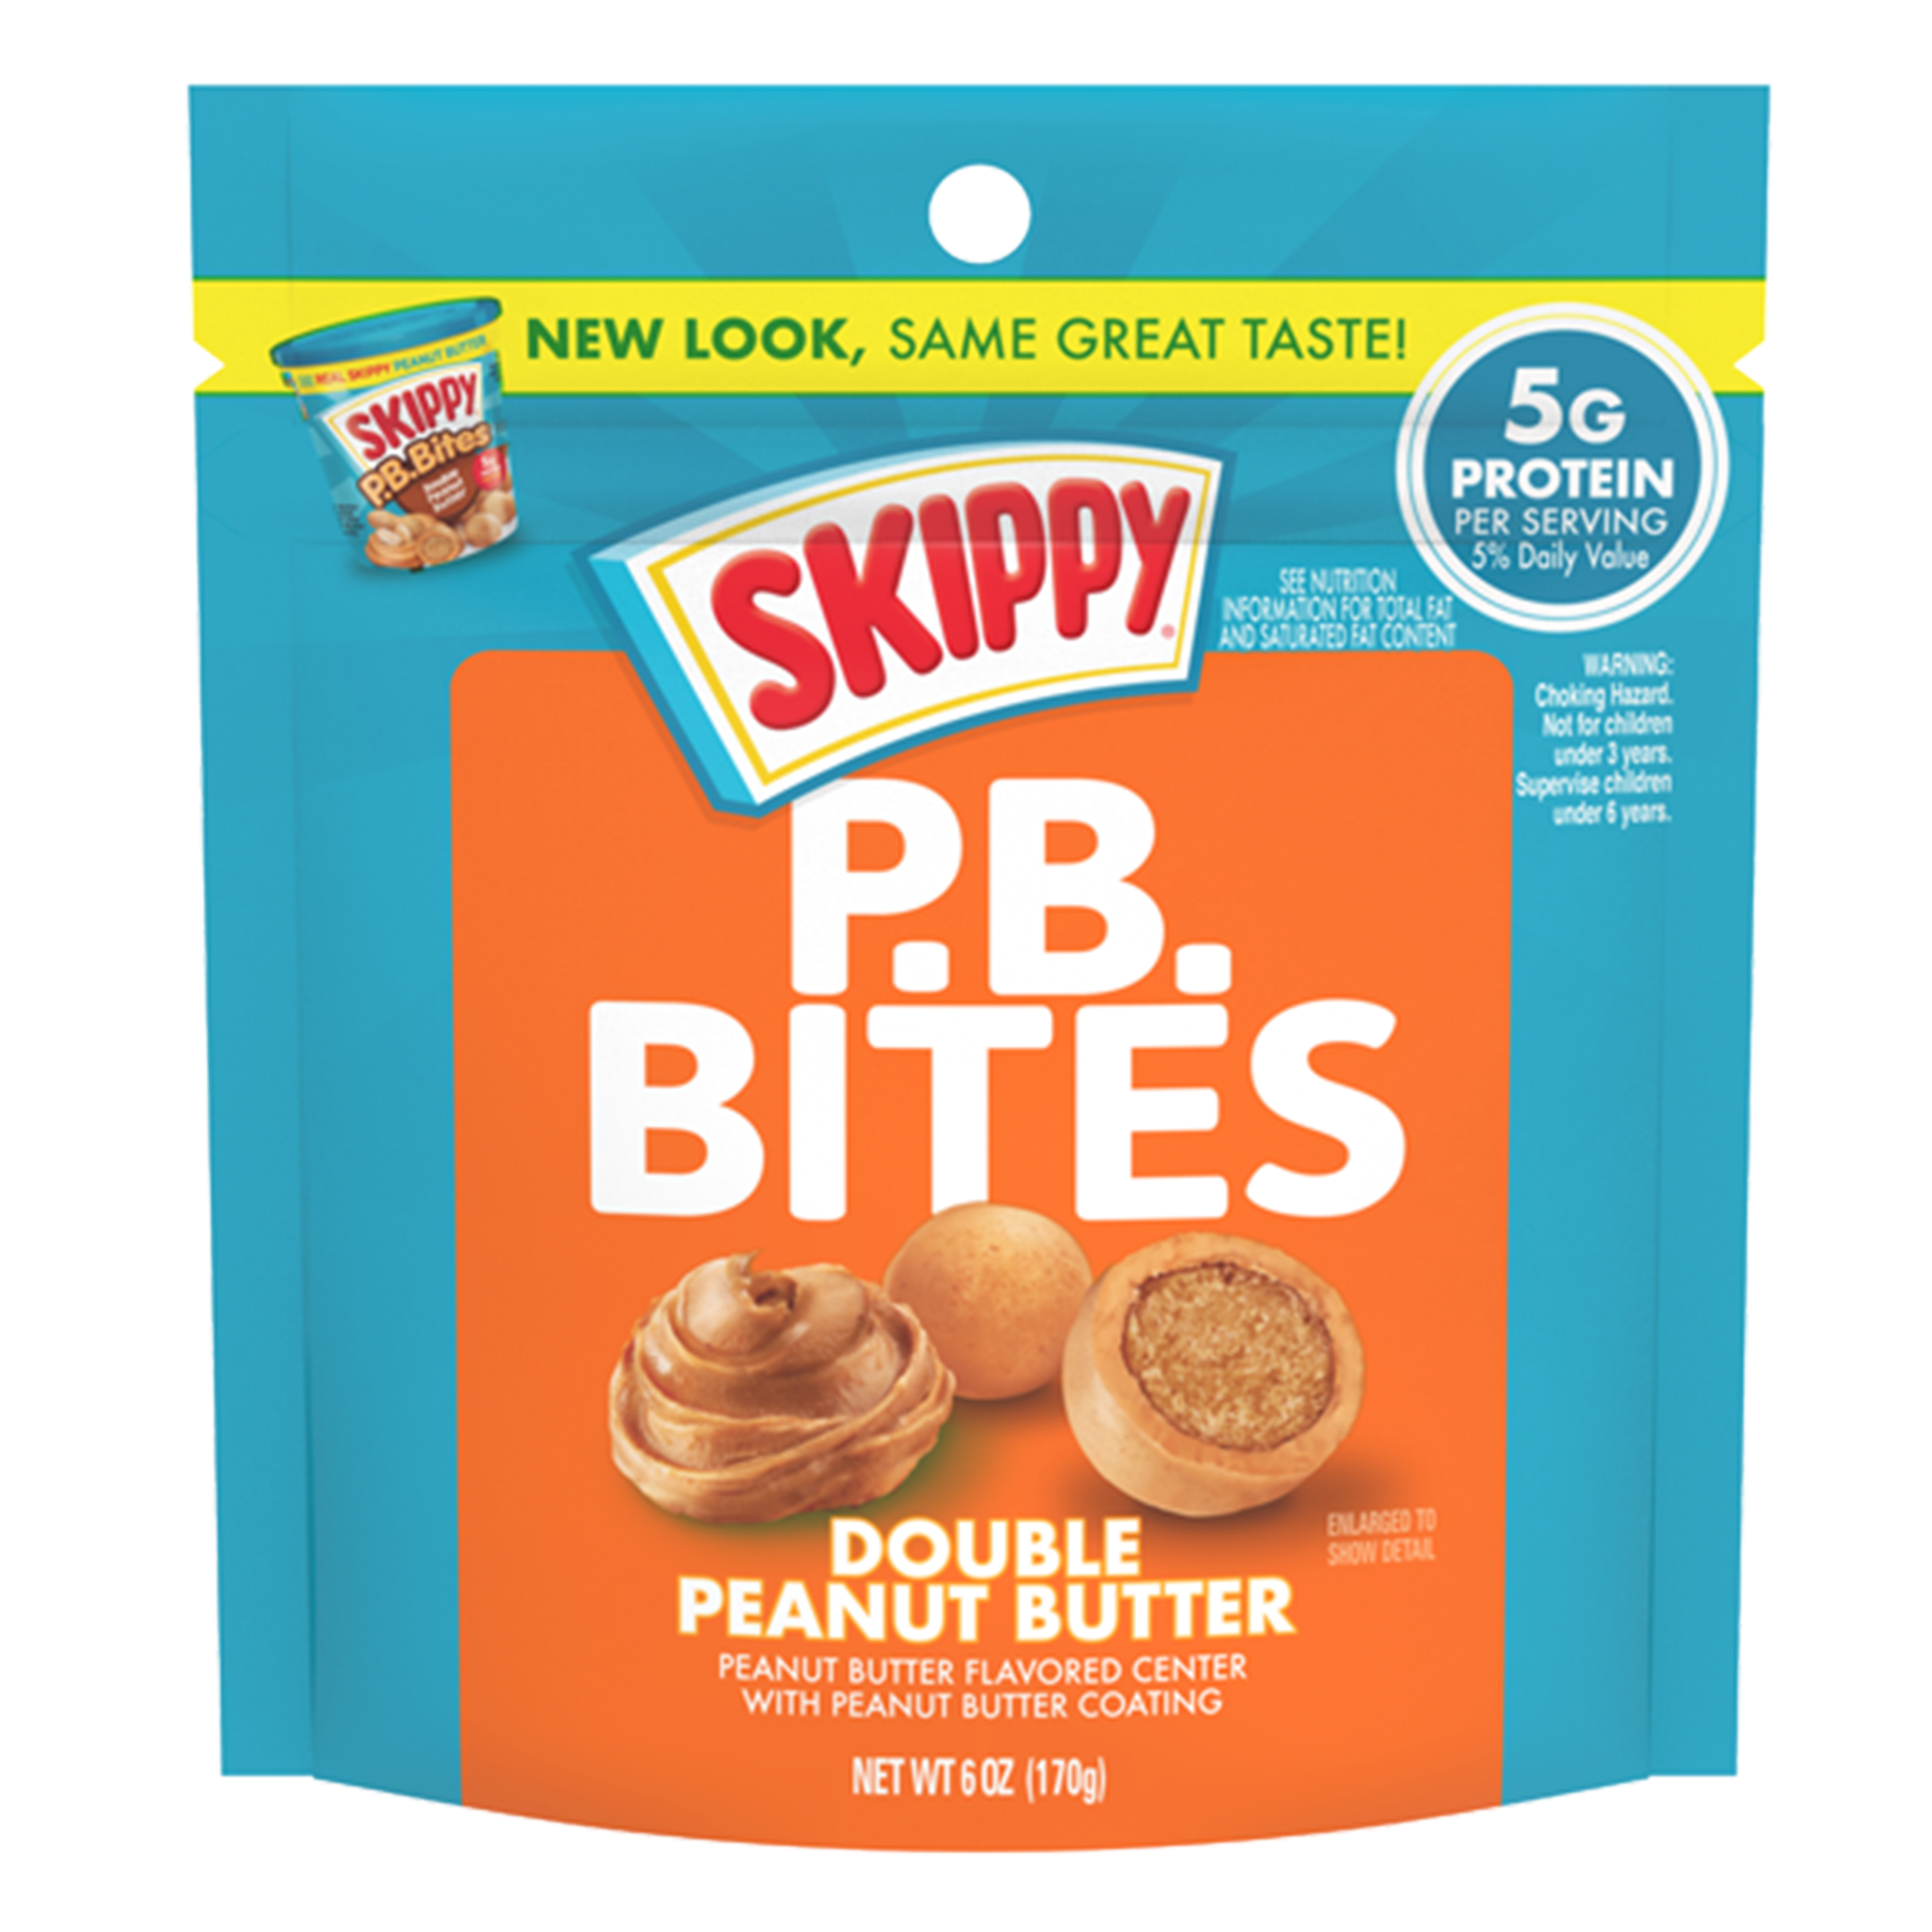 Skippy P.B Bites - Double Peanut Butter